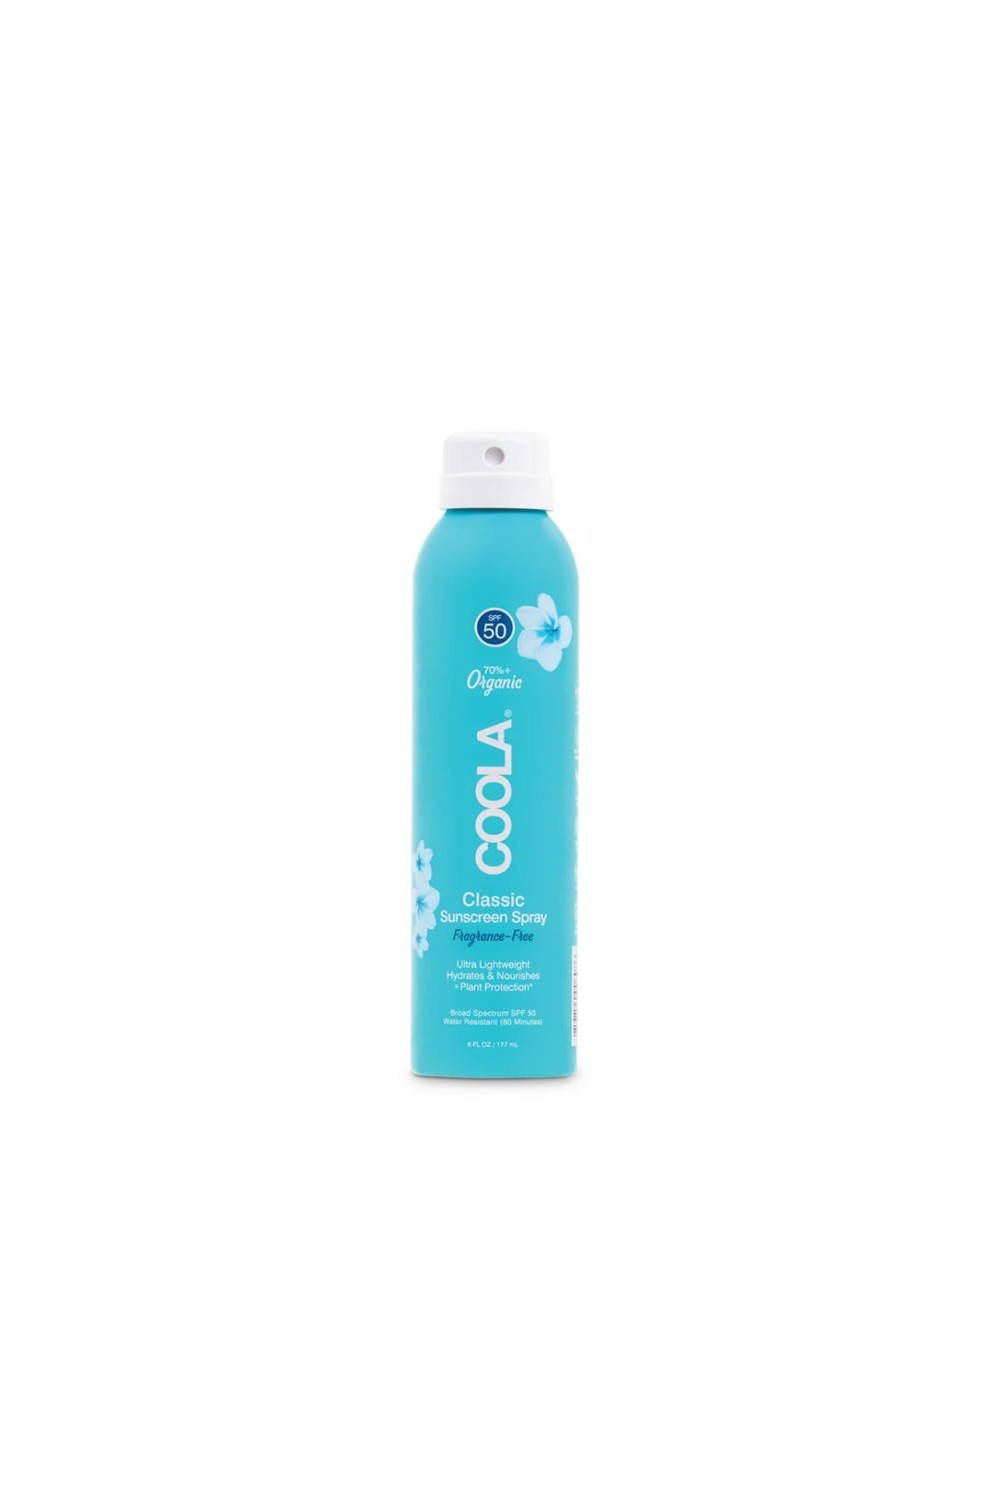 Coola Classic Body Organic Sunscreen Spray Spf50 Fragrance Free 177ml